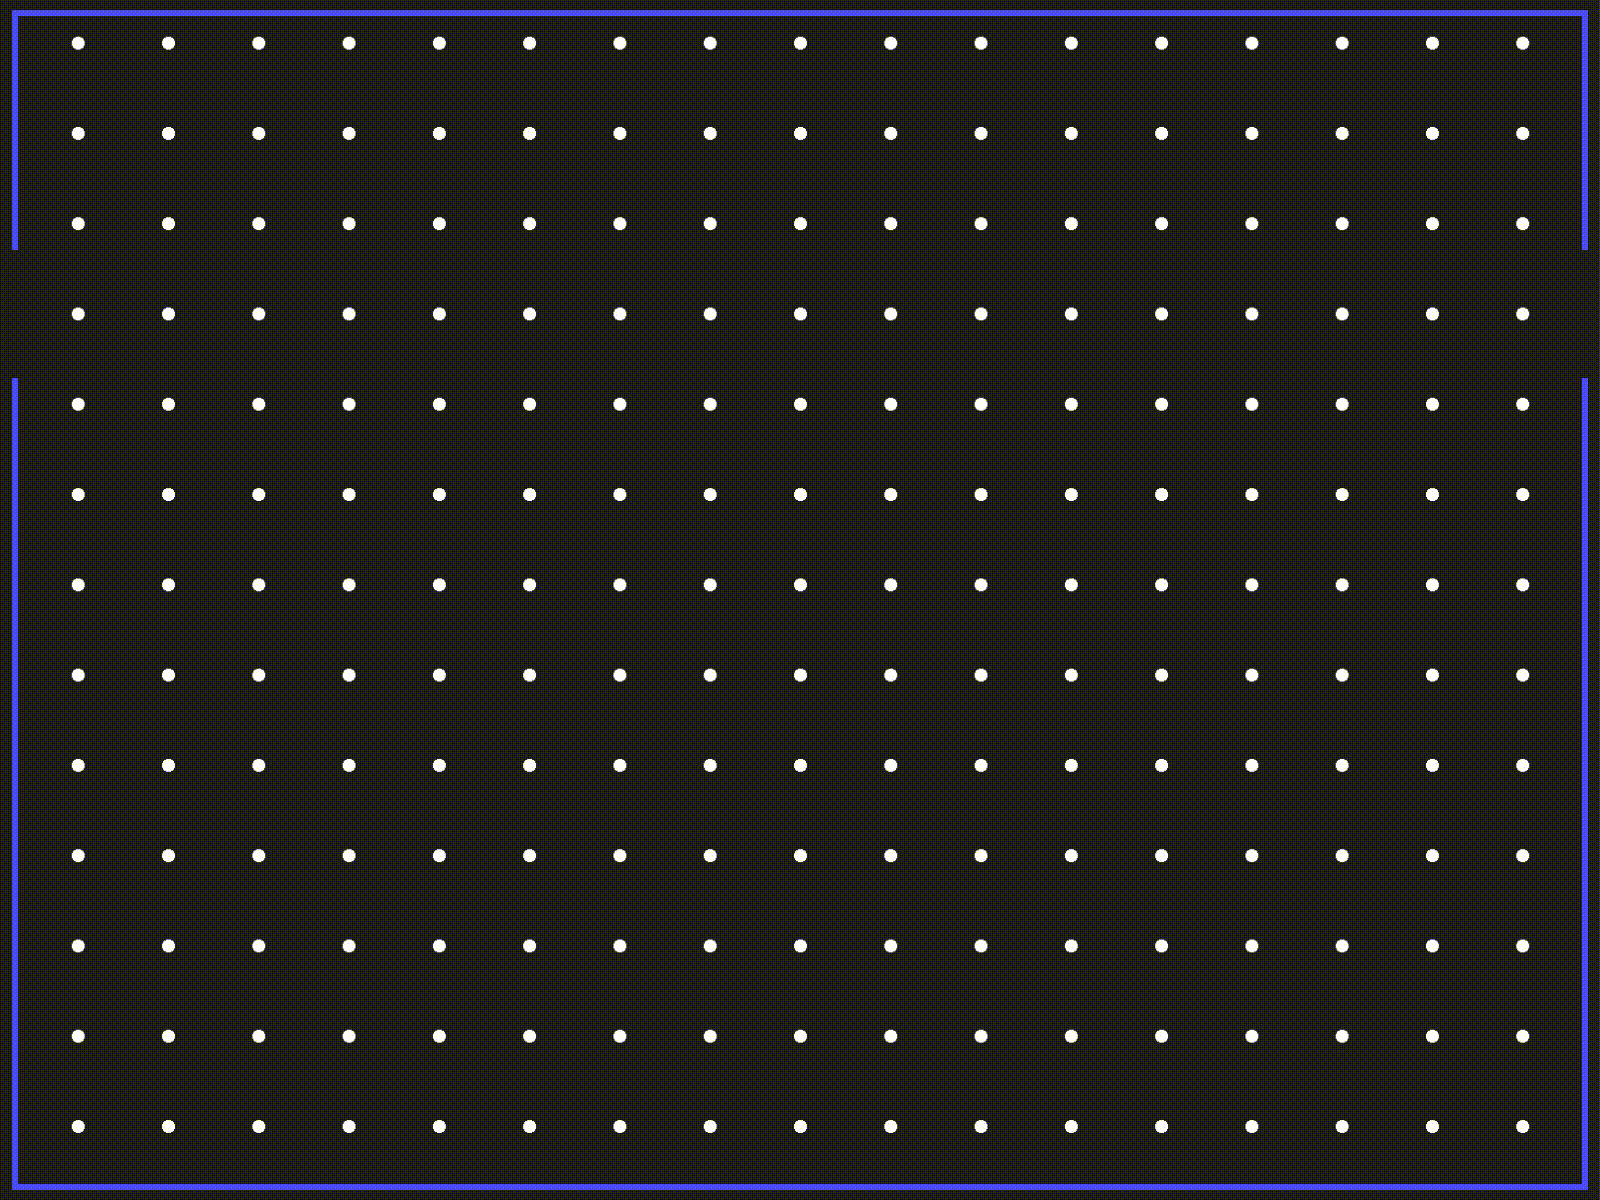 Pacman pattern